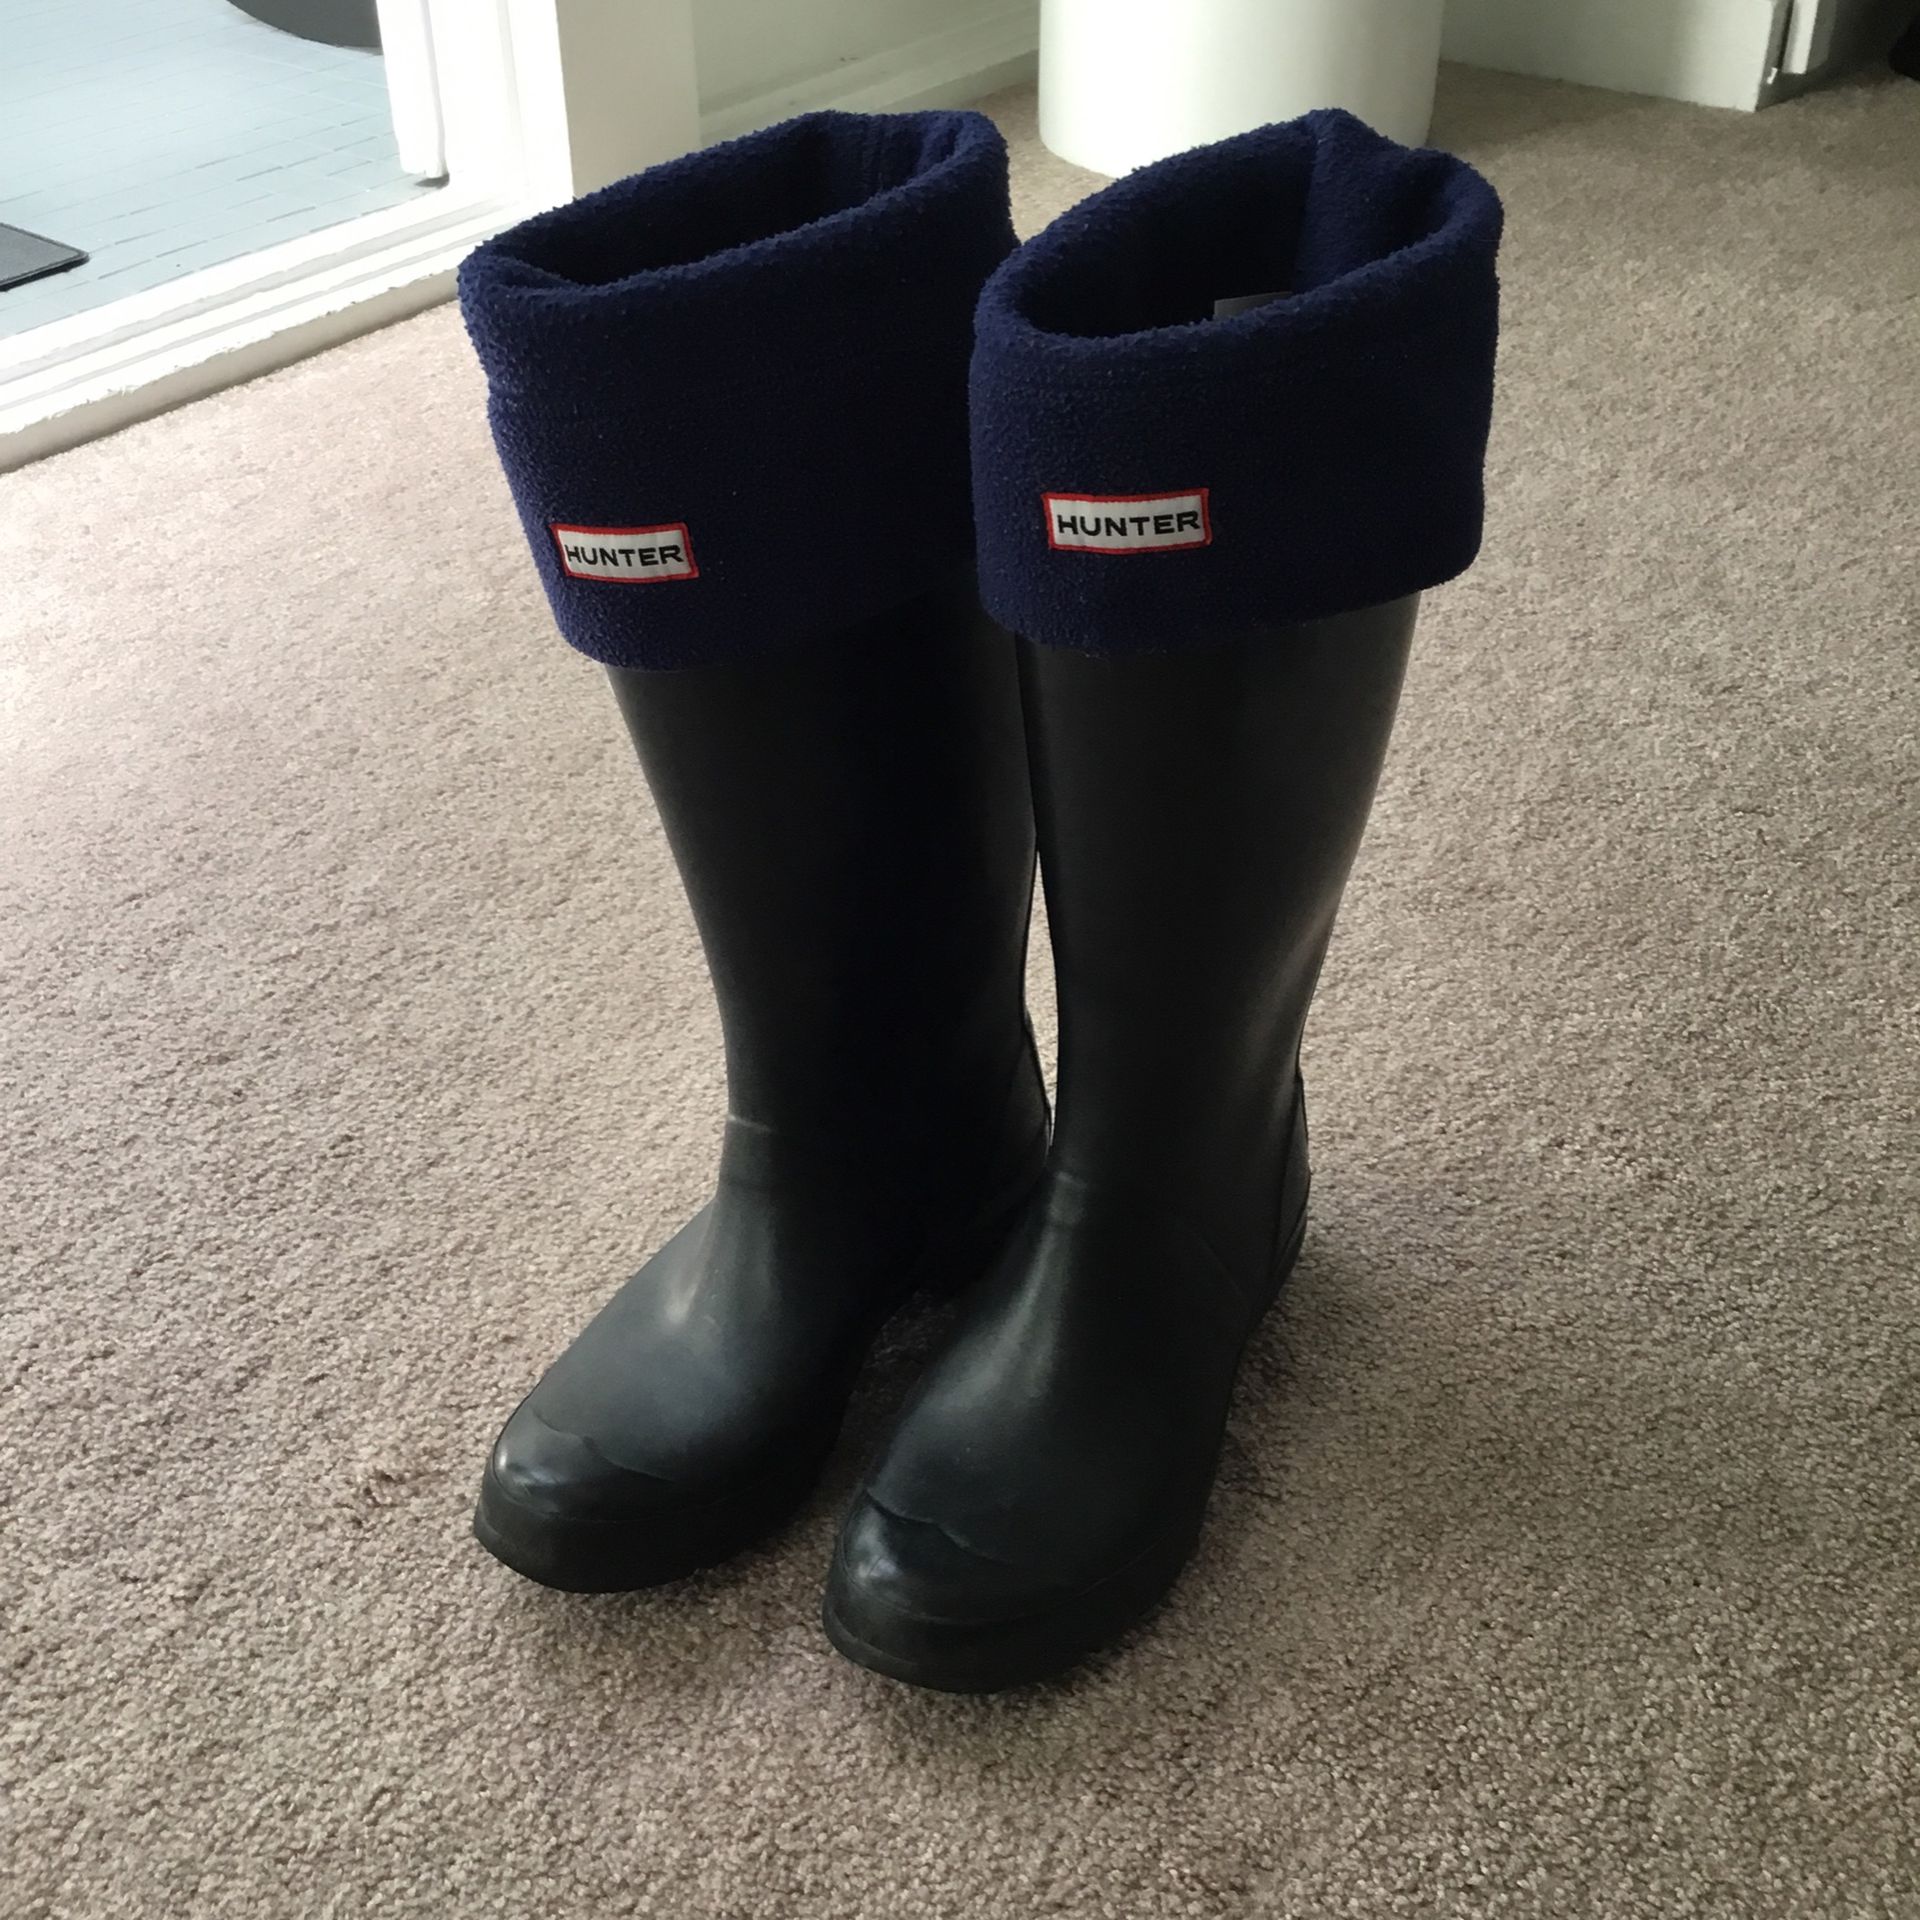 7M Hunter Rain boots with Hunter socks